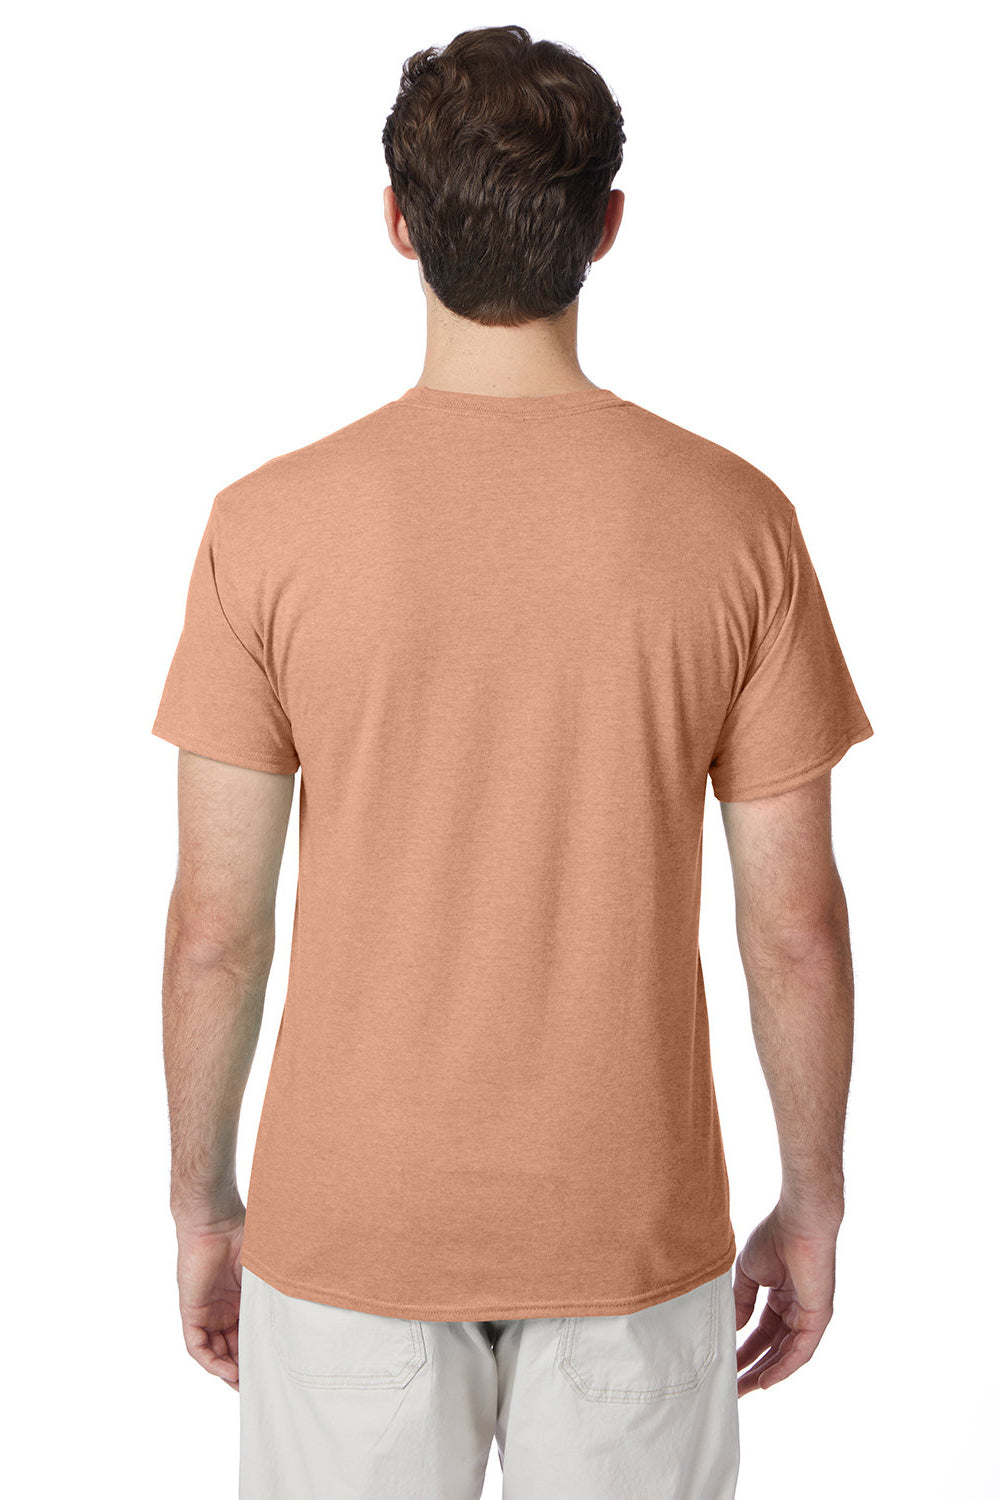 Hanes 42TB Mens X-Temp FreshIQ Moisture Wicking Short Sleeve Crewneck T-Shirt Heather Cantaloupe Orange Back